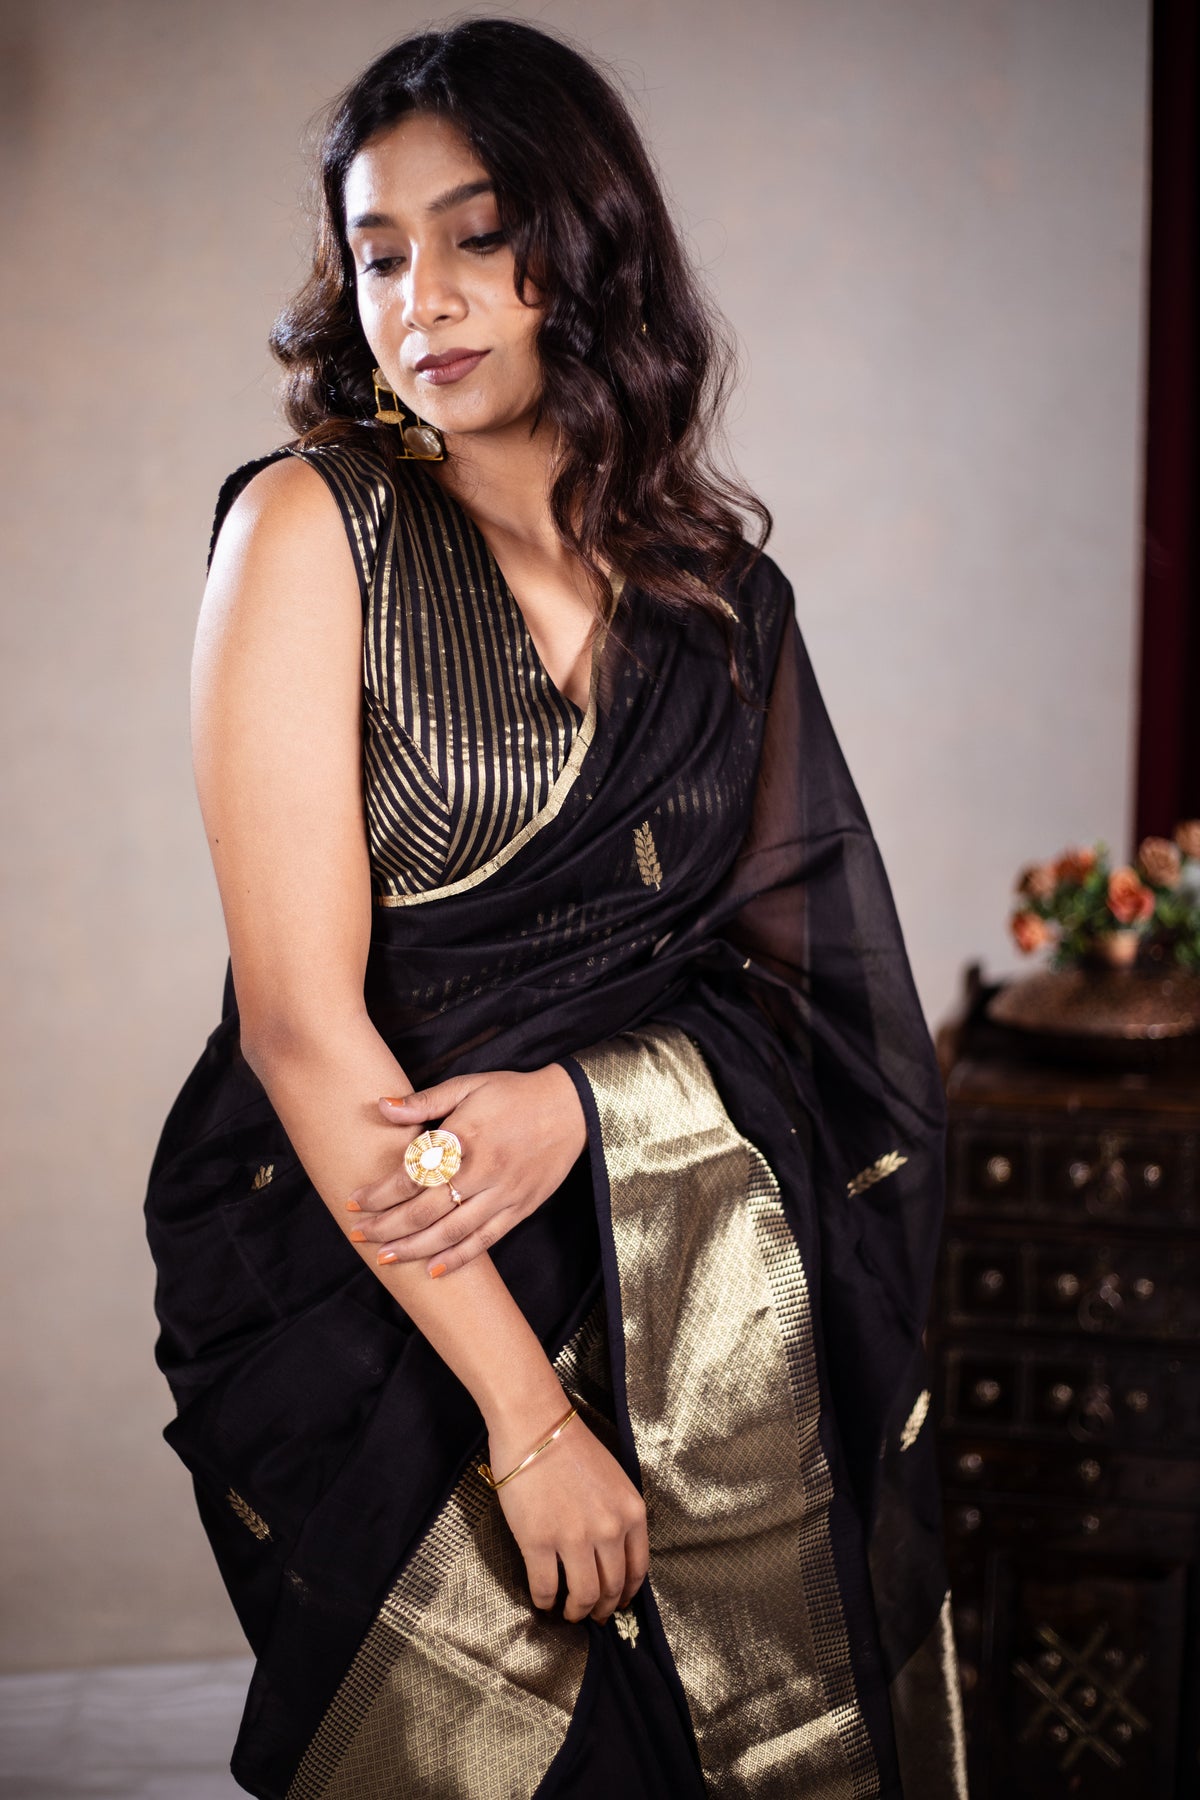 Reeva - Handwoven silk cotton saree - Black Pearl + Gold